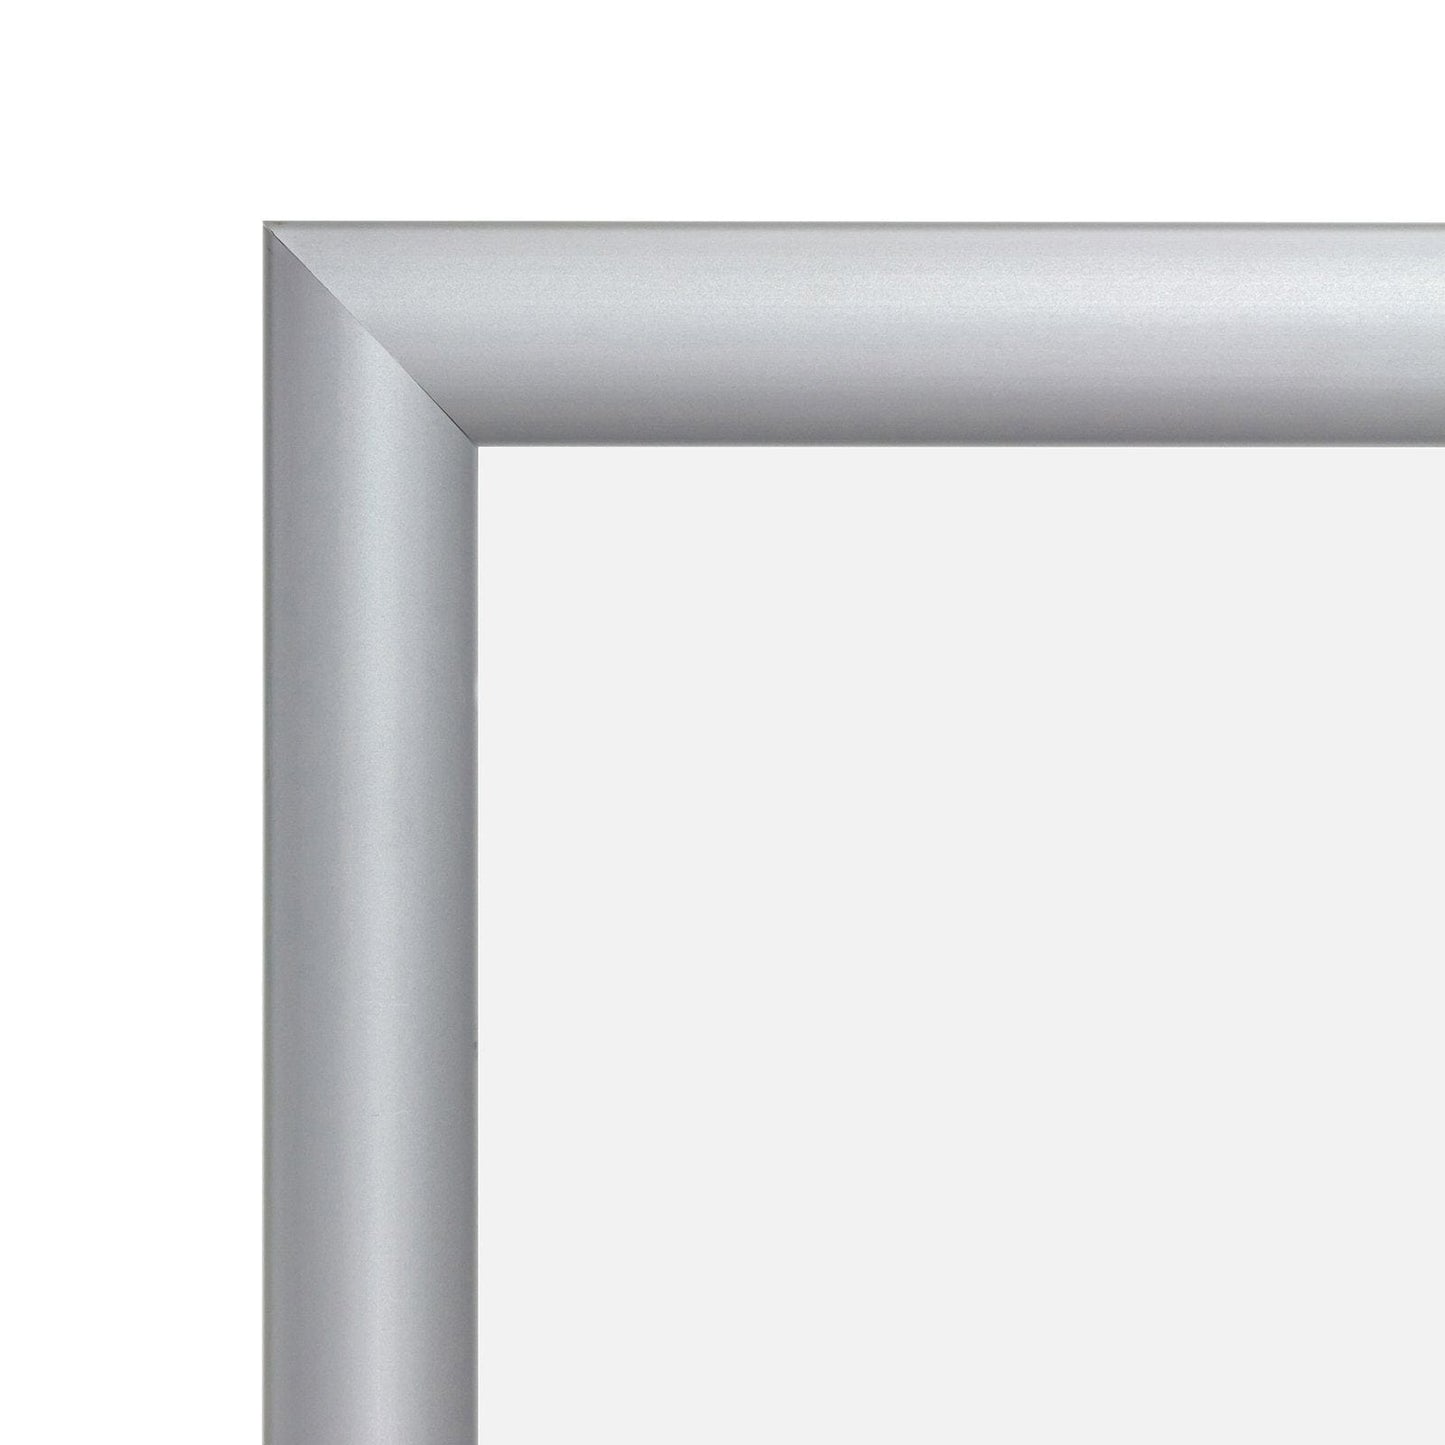 17x19 Silver SnapeZo® Snap Frame - 1.2" Profile - Snap Frames Direct